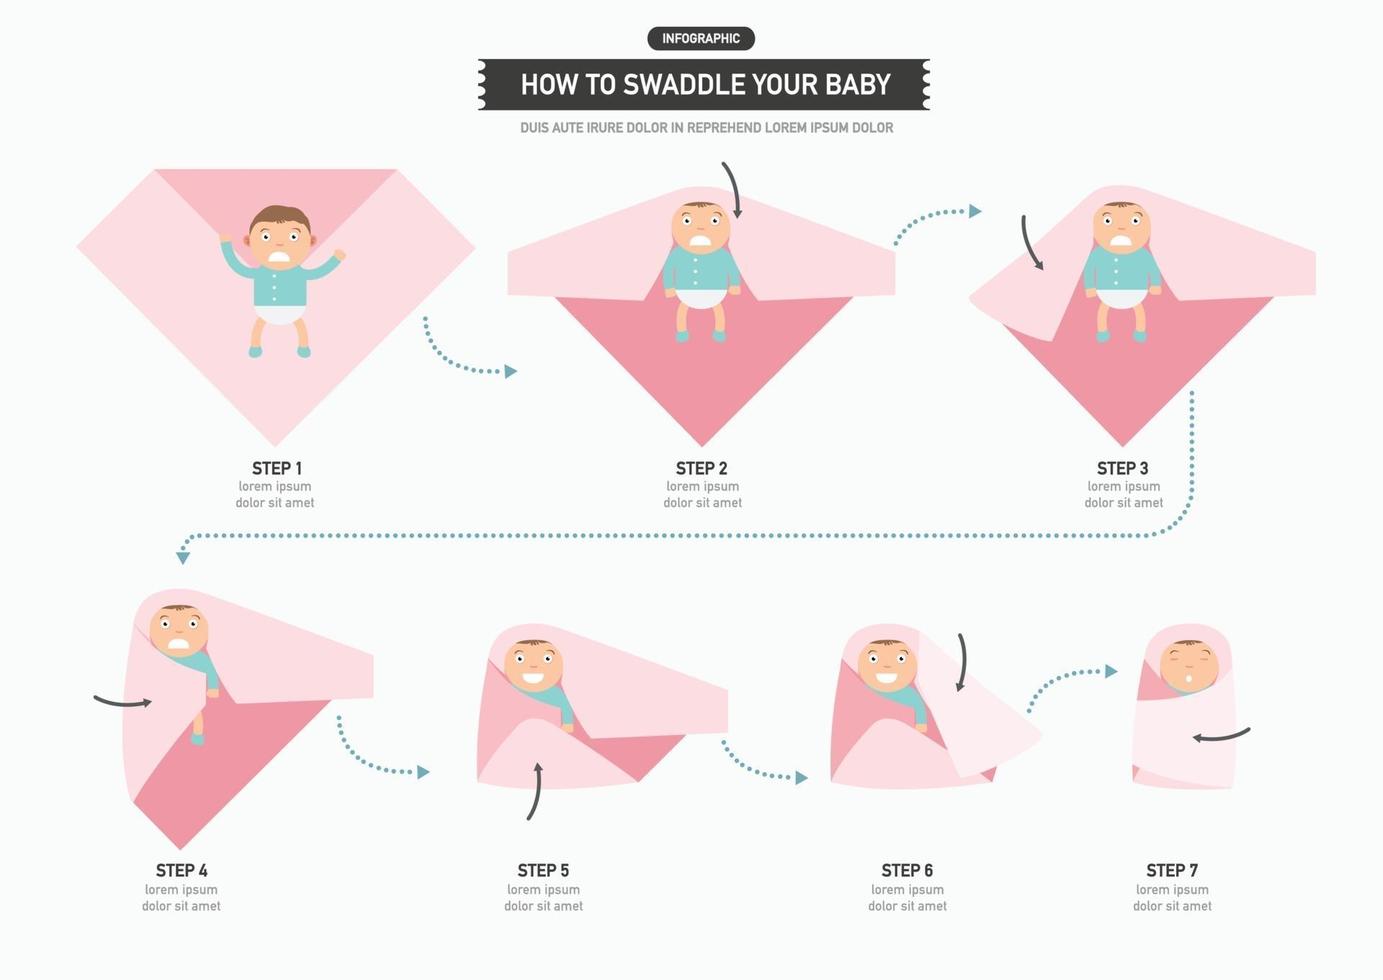 hur man swaddlar din baby infographic vektor